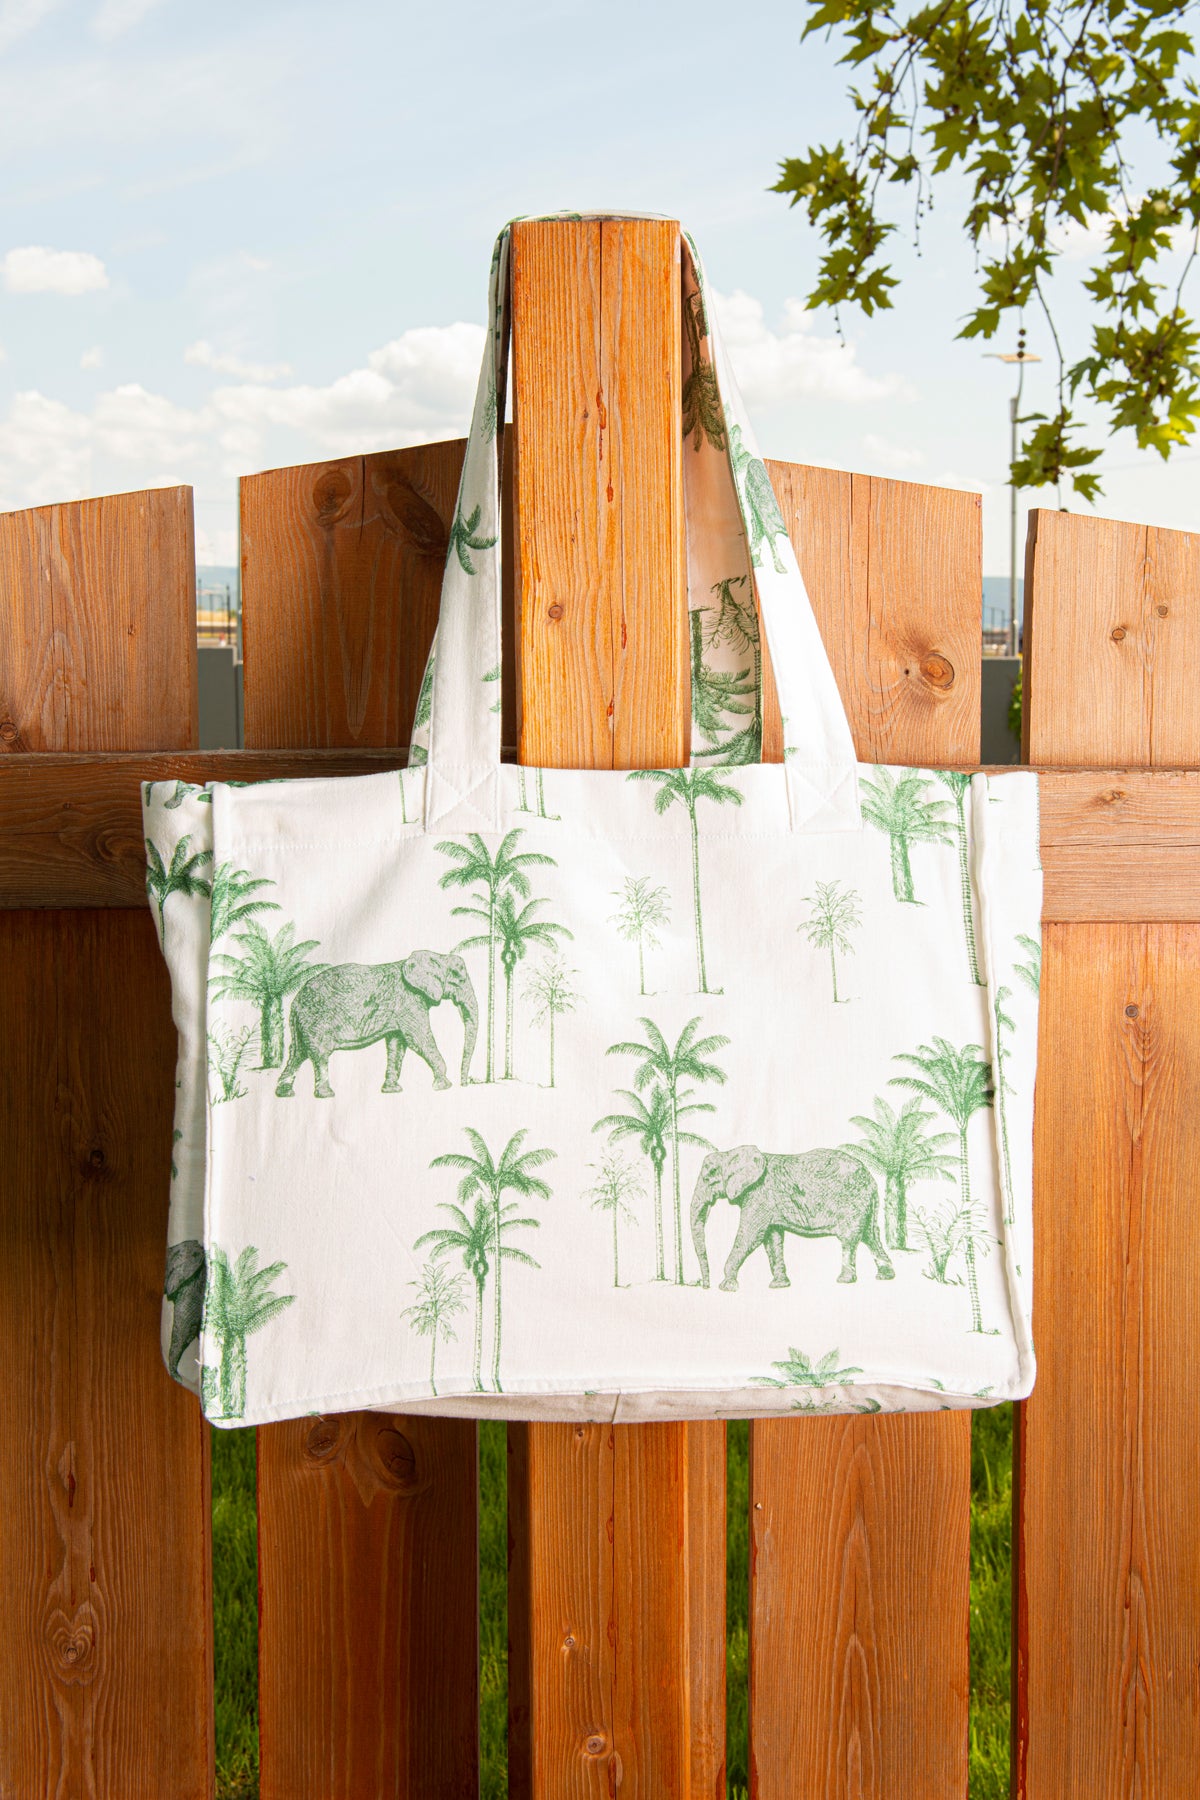 IR WEAR Tropical Printed Beach Bag